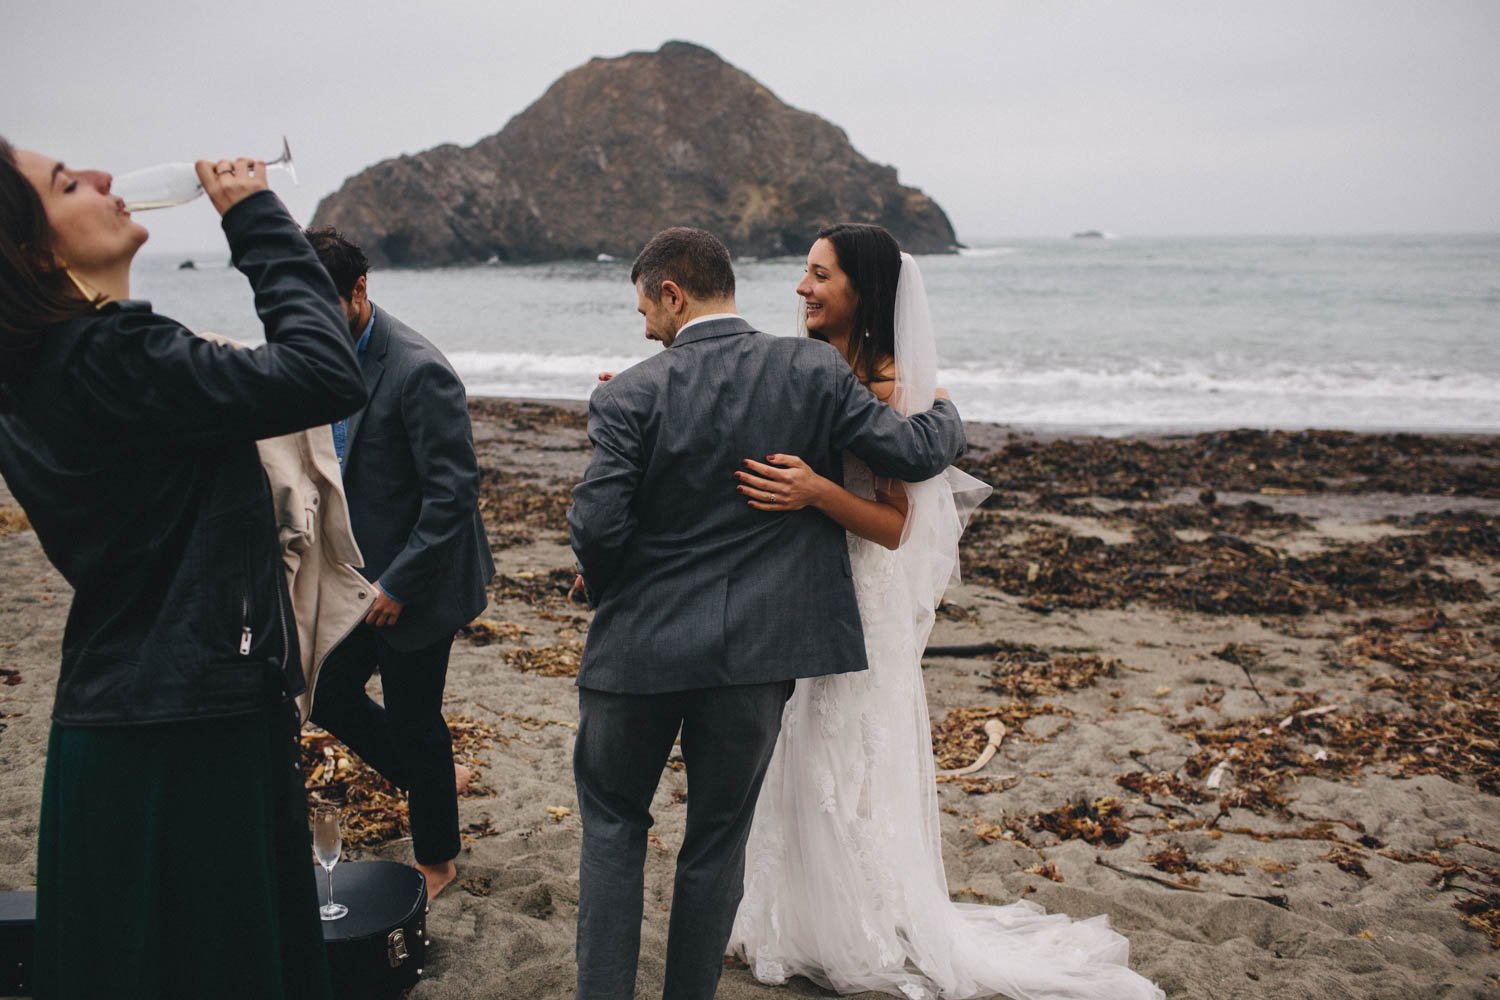 Rachelle Derouin Wedding Photographer Mendocino Beach-78.jpg